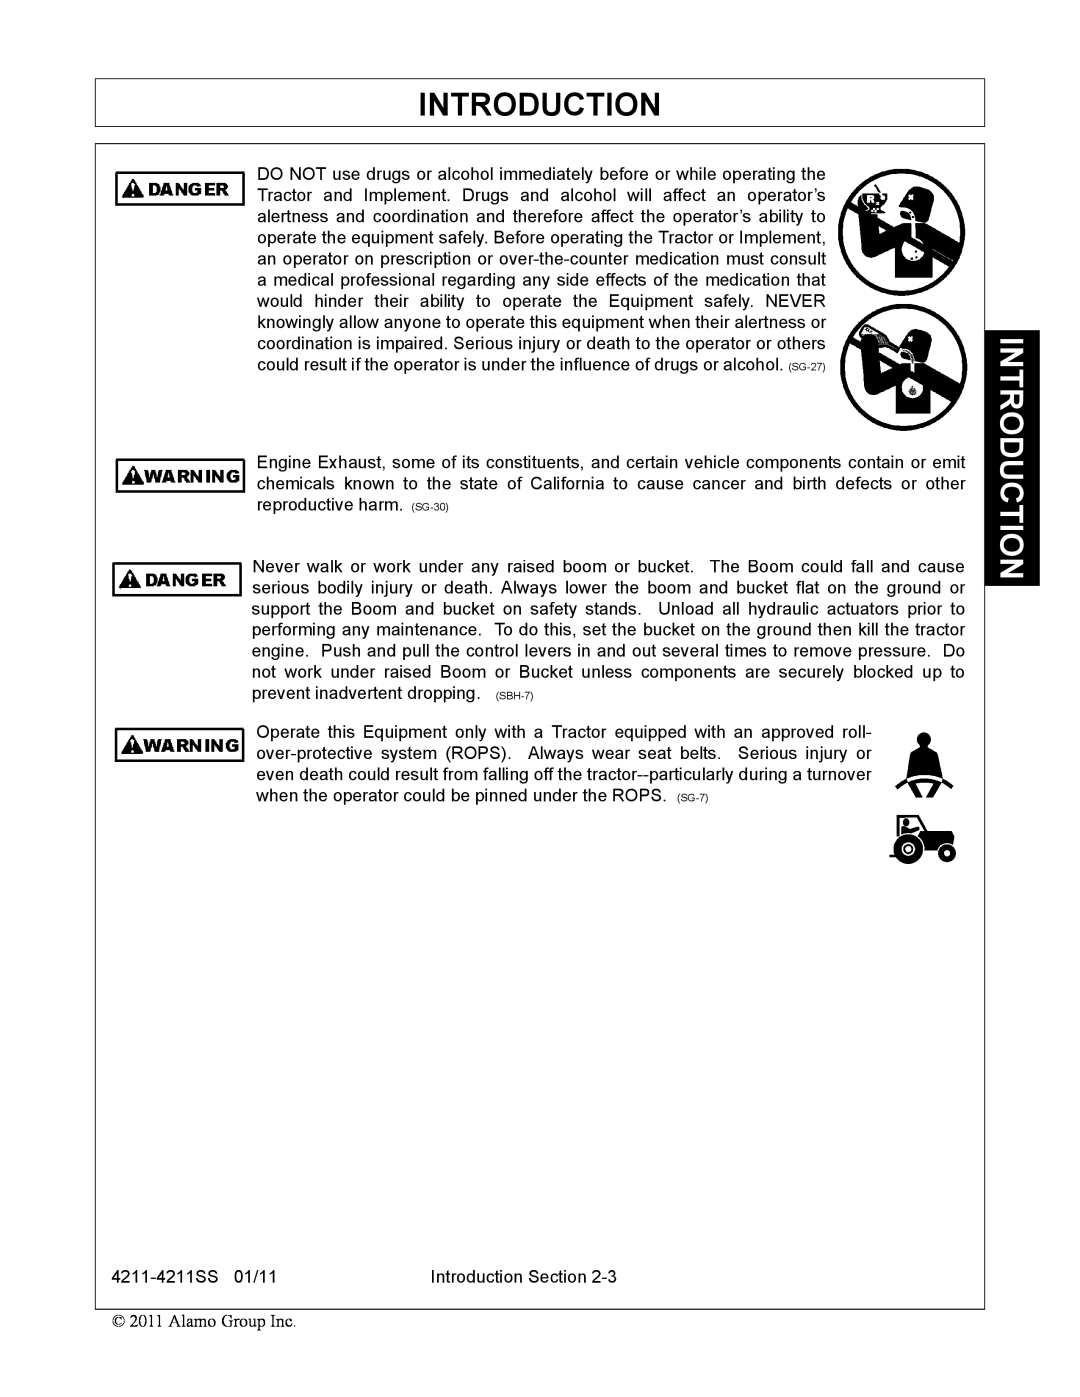 Servis-Rhino 4211SS manual Introduction 